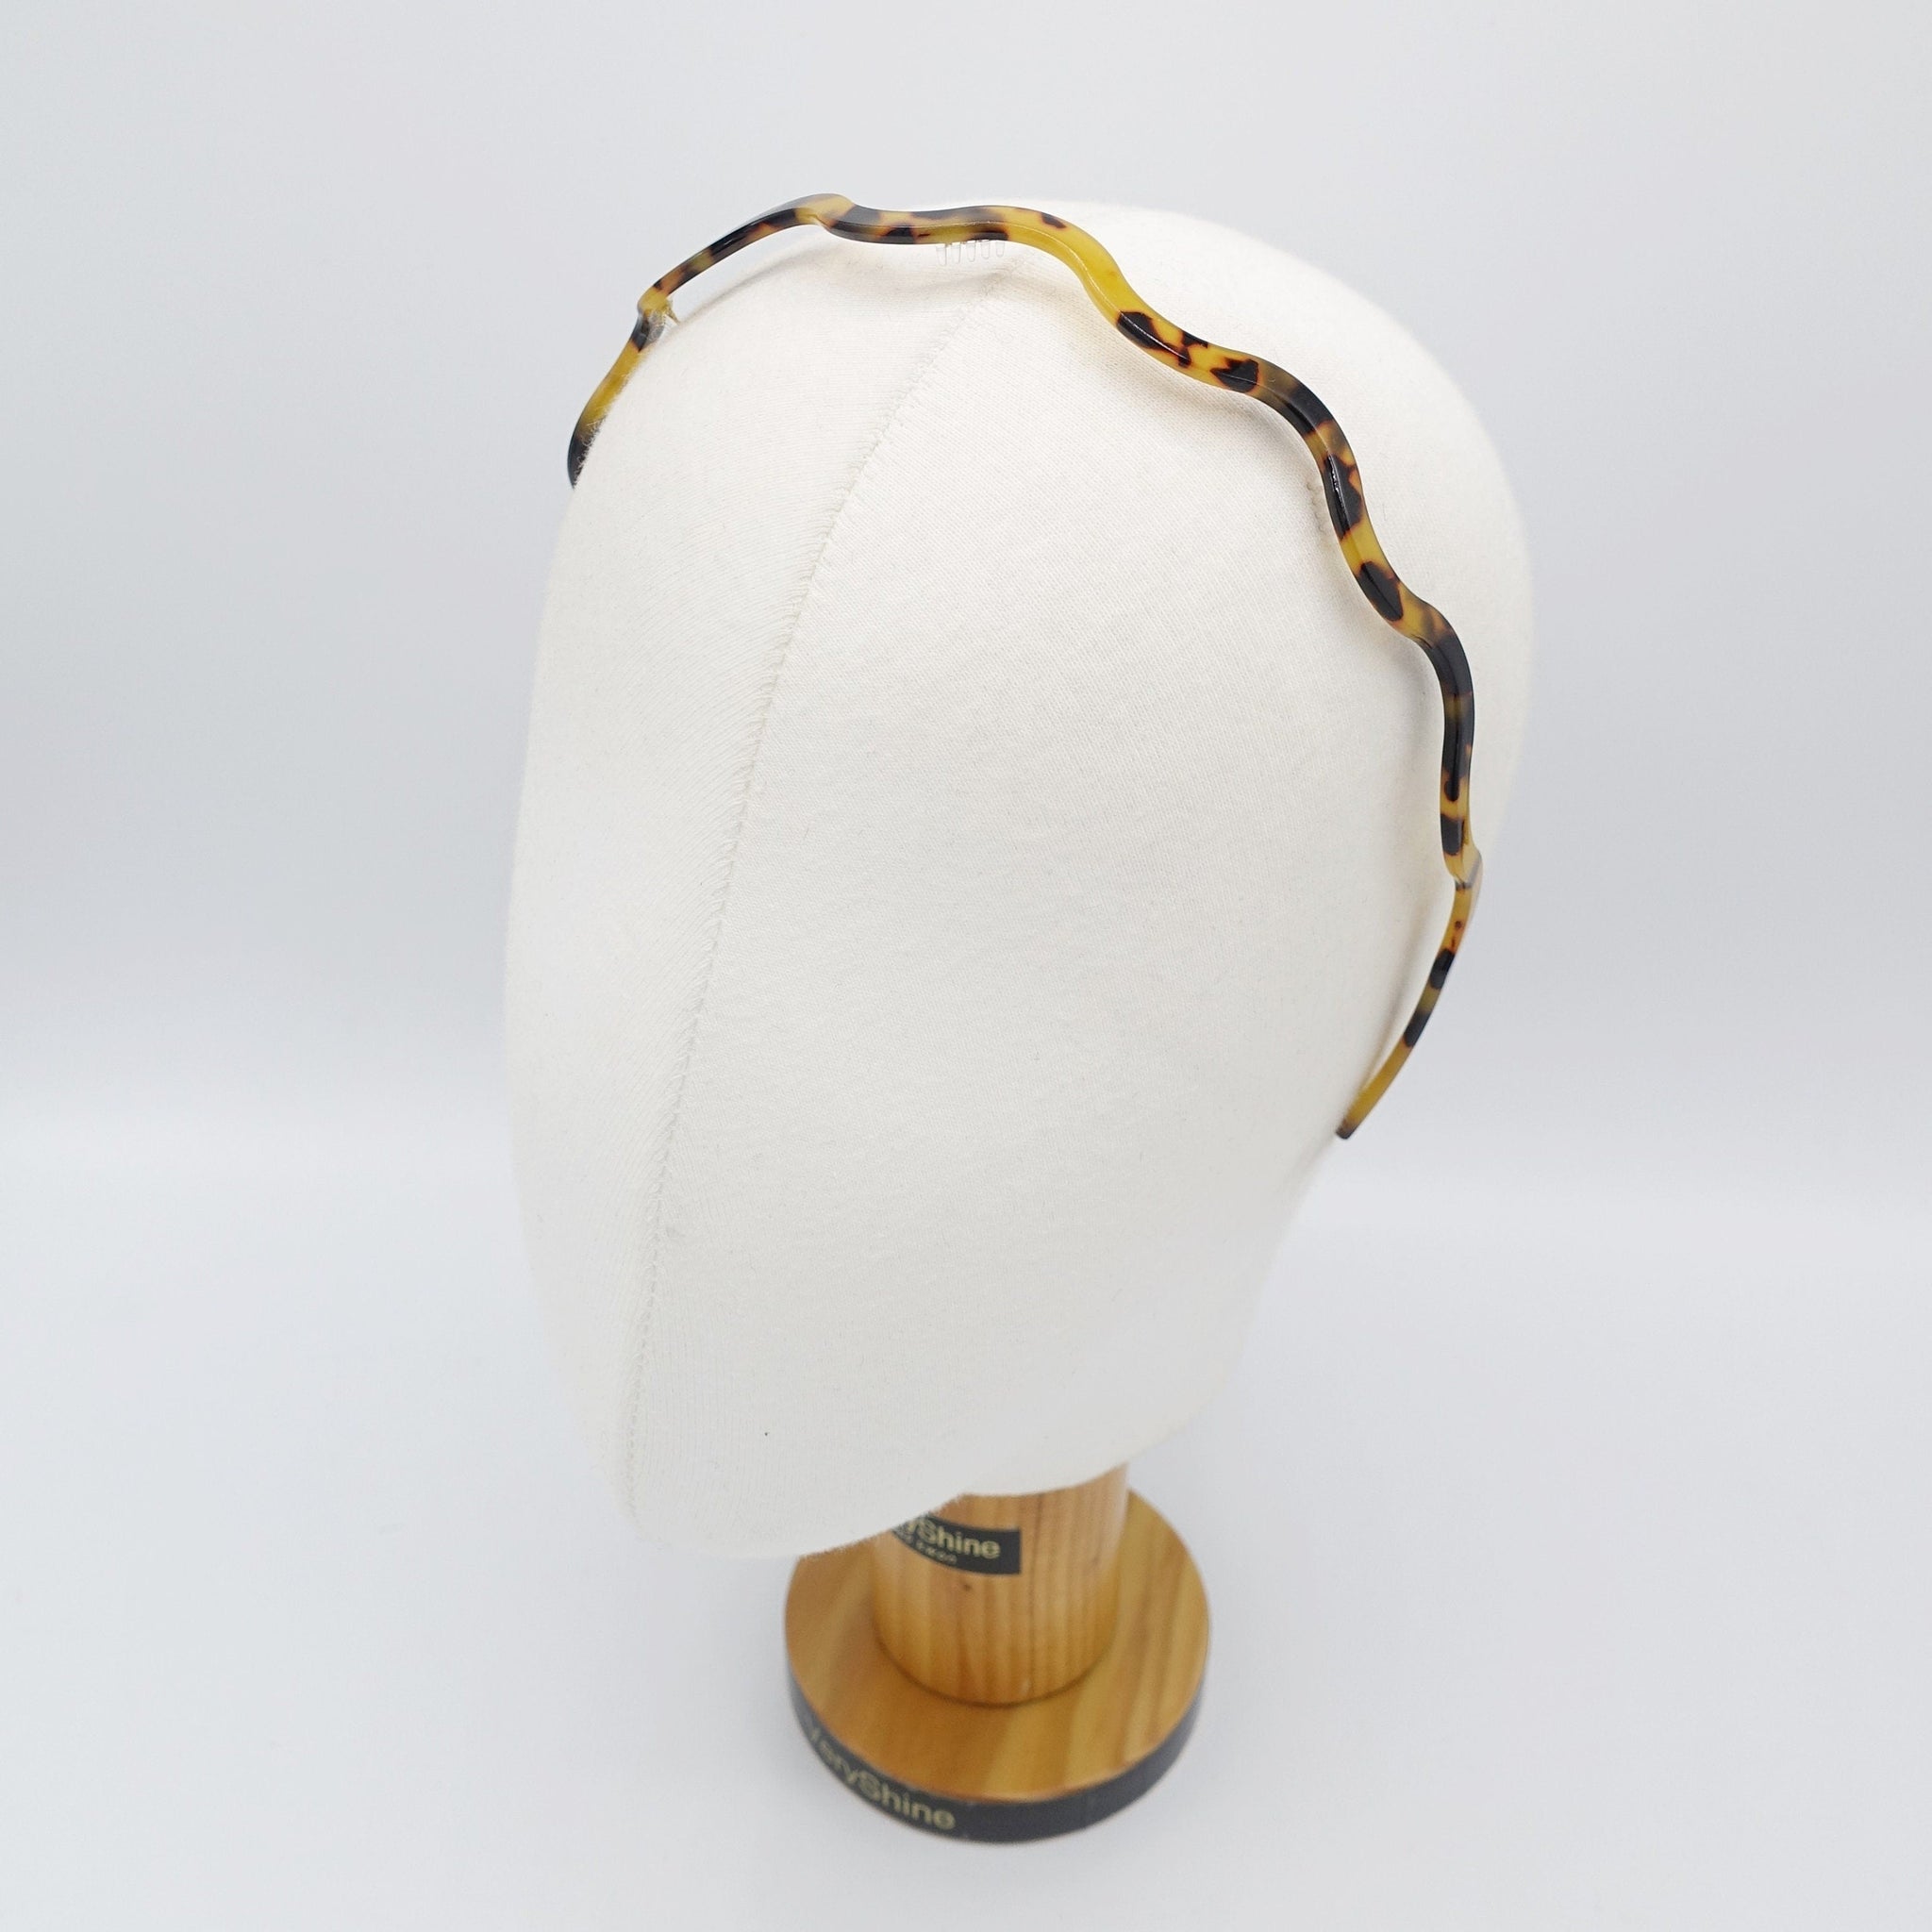 VeryShine thin headband cellulose acetate wave bow comb hairband